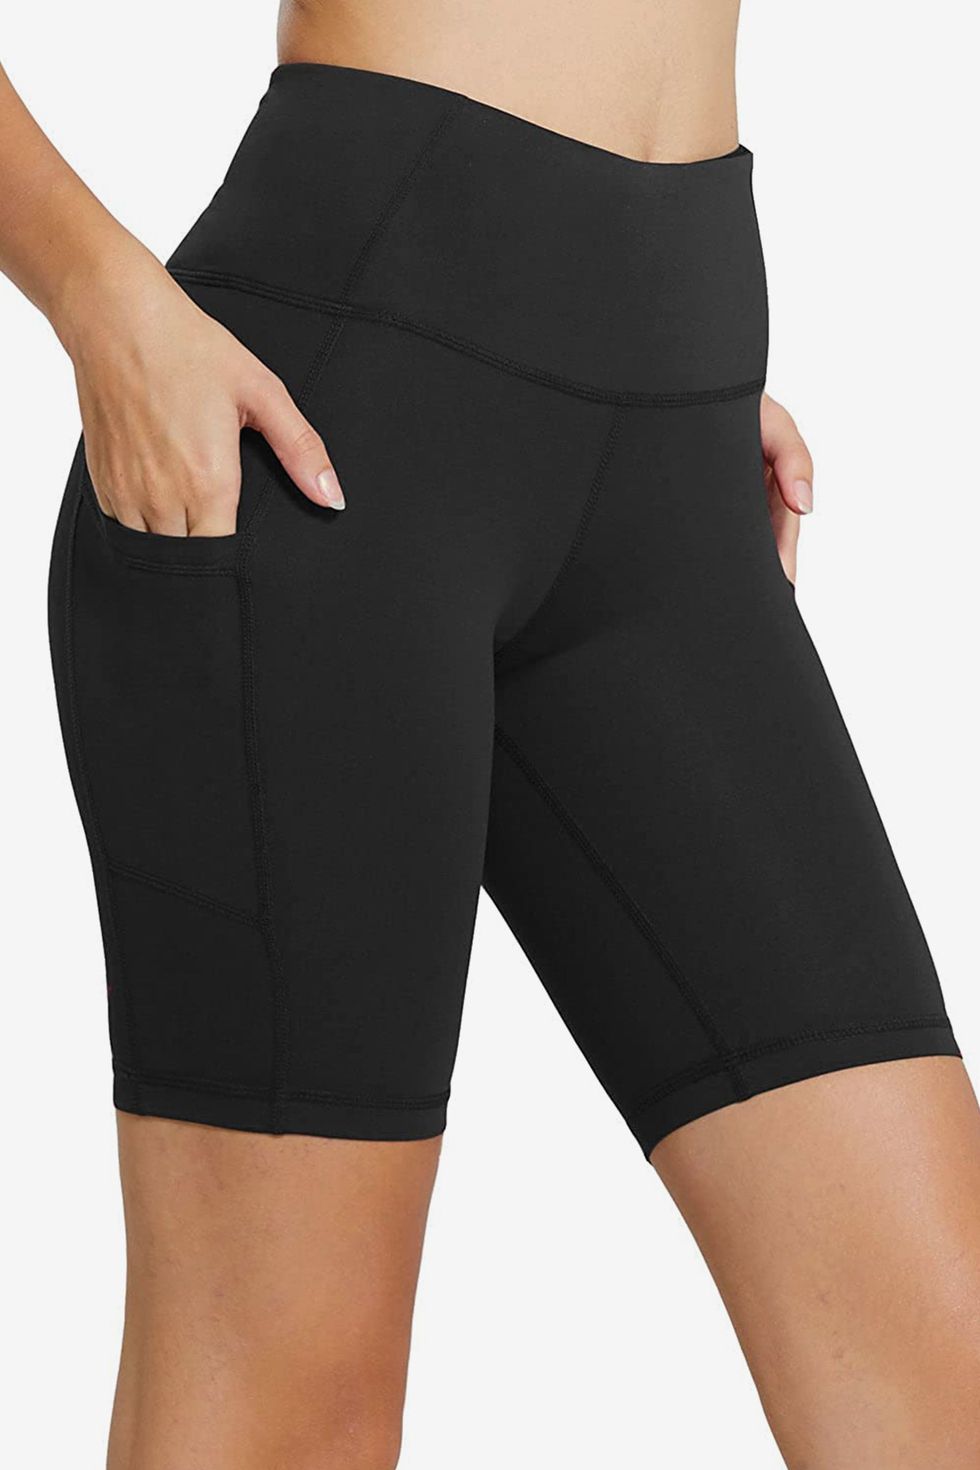 Women’s Biker Shorts High Waist 8“ Compression Spandex Shorts with Pockets 